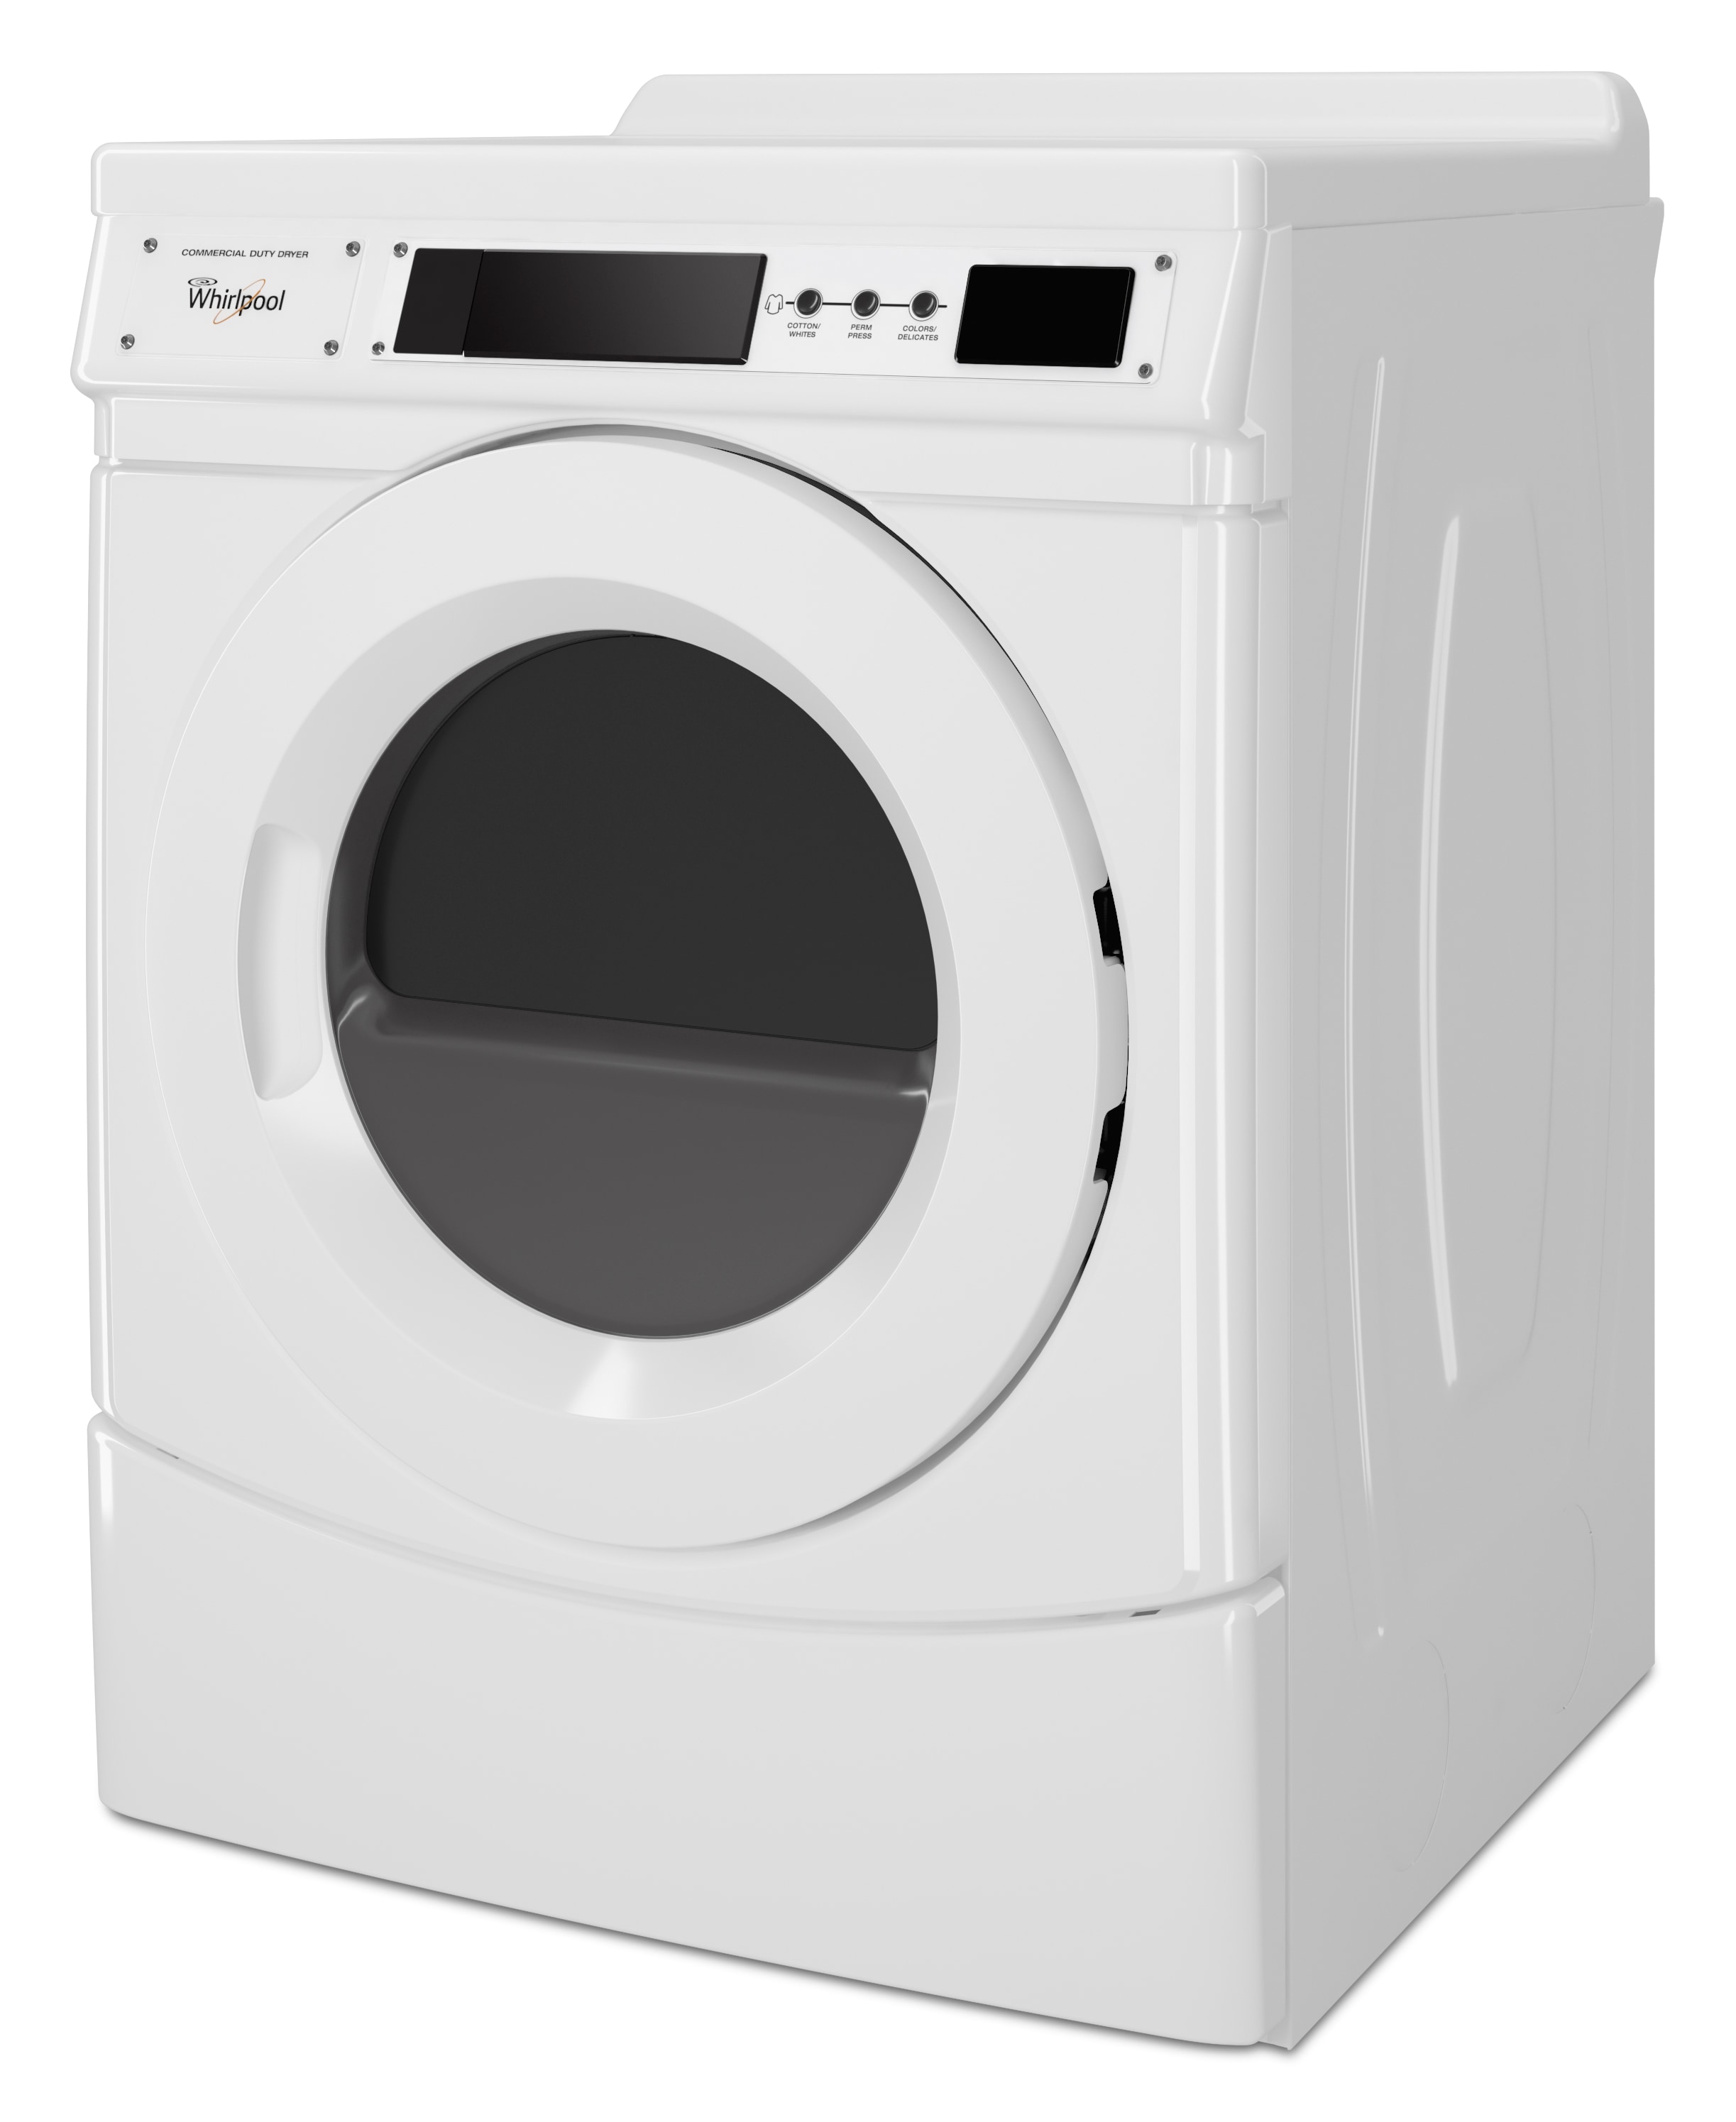 Full Body Dryer For Homes And Commercial Premises 